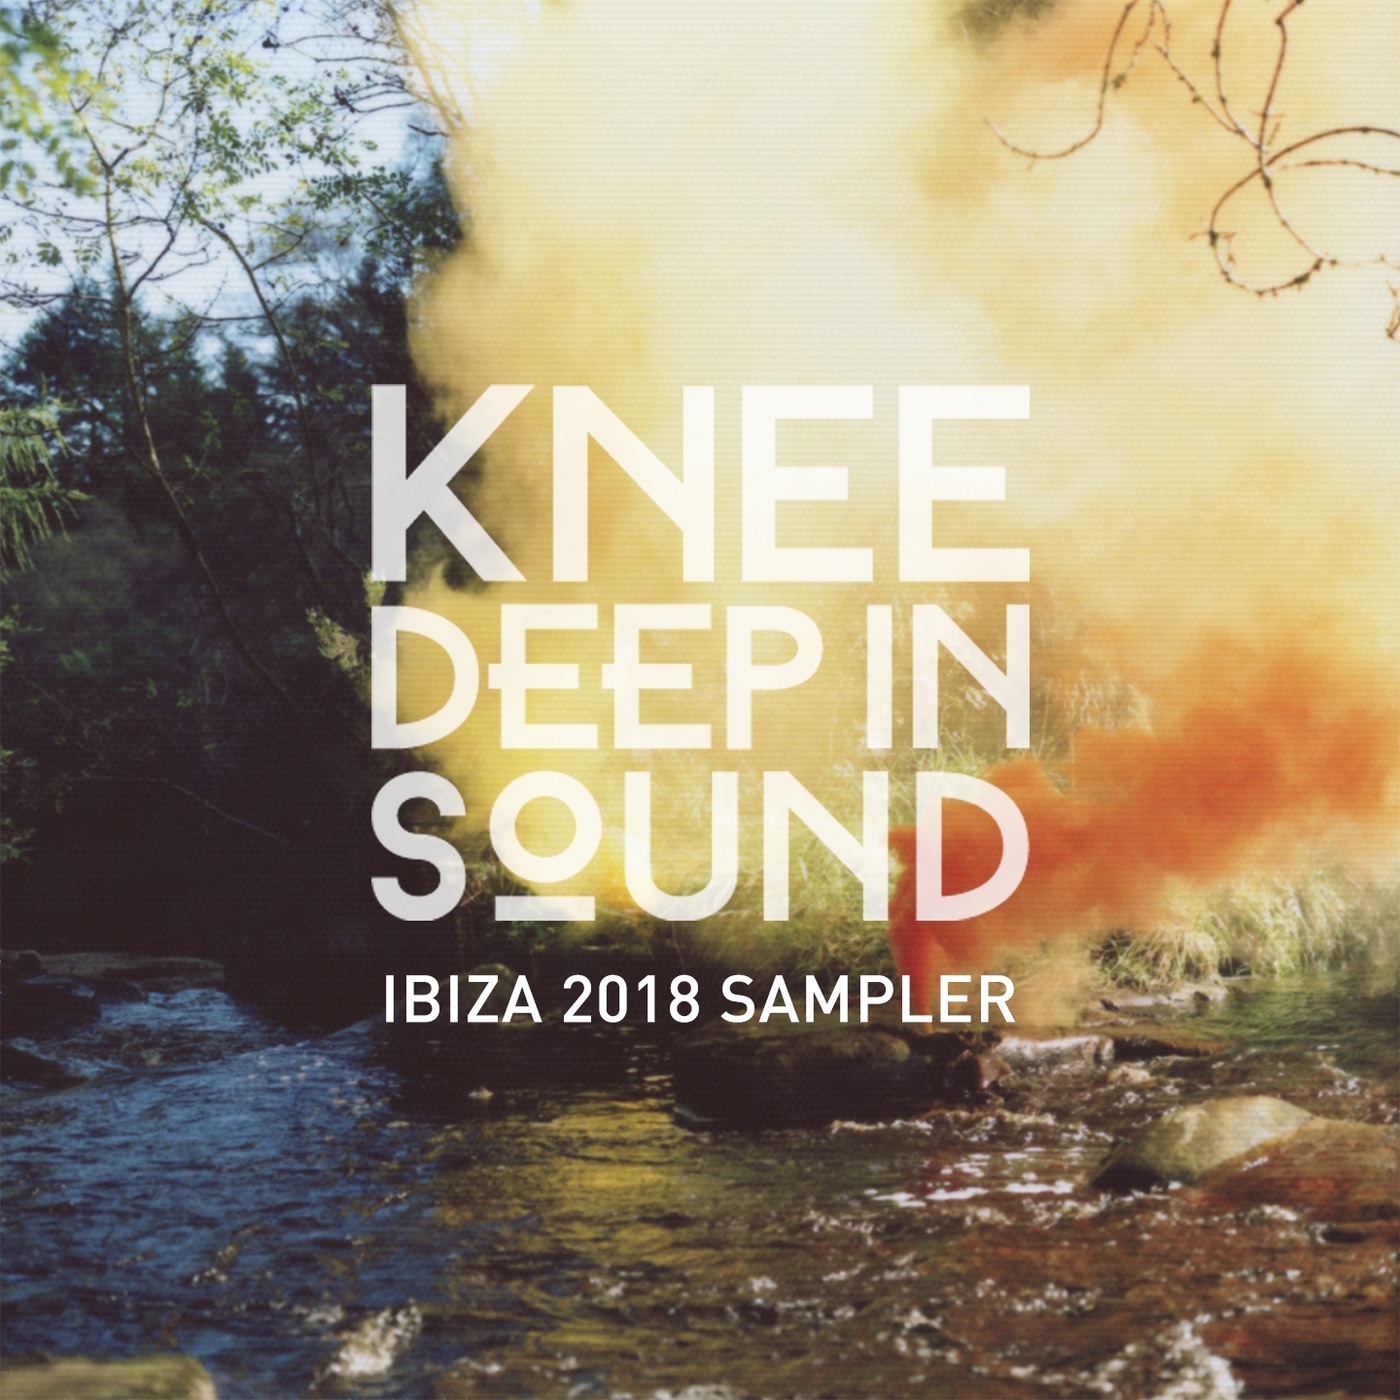 VA - Ibiza 2018 Sampler / Knee Deep In Sound